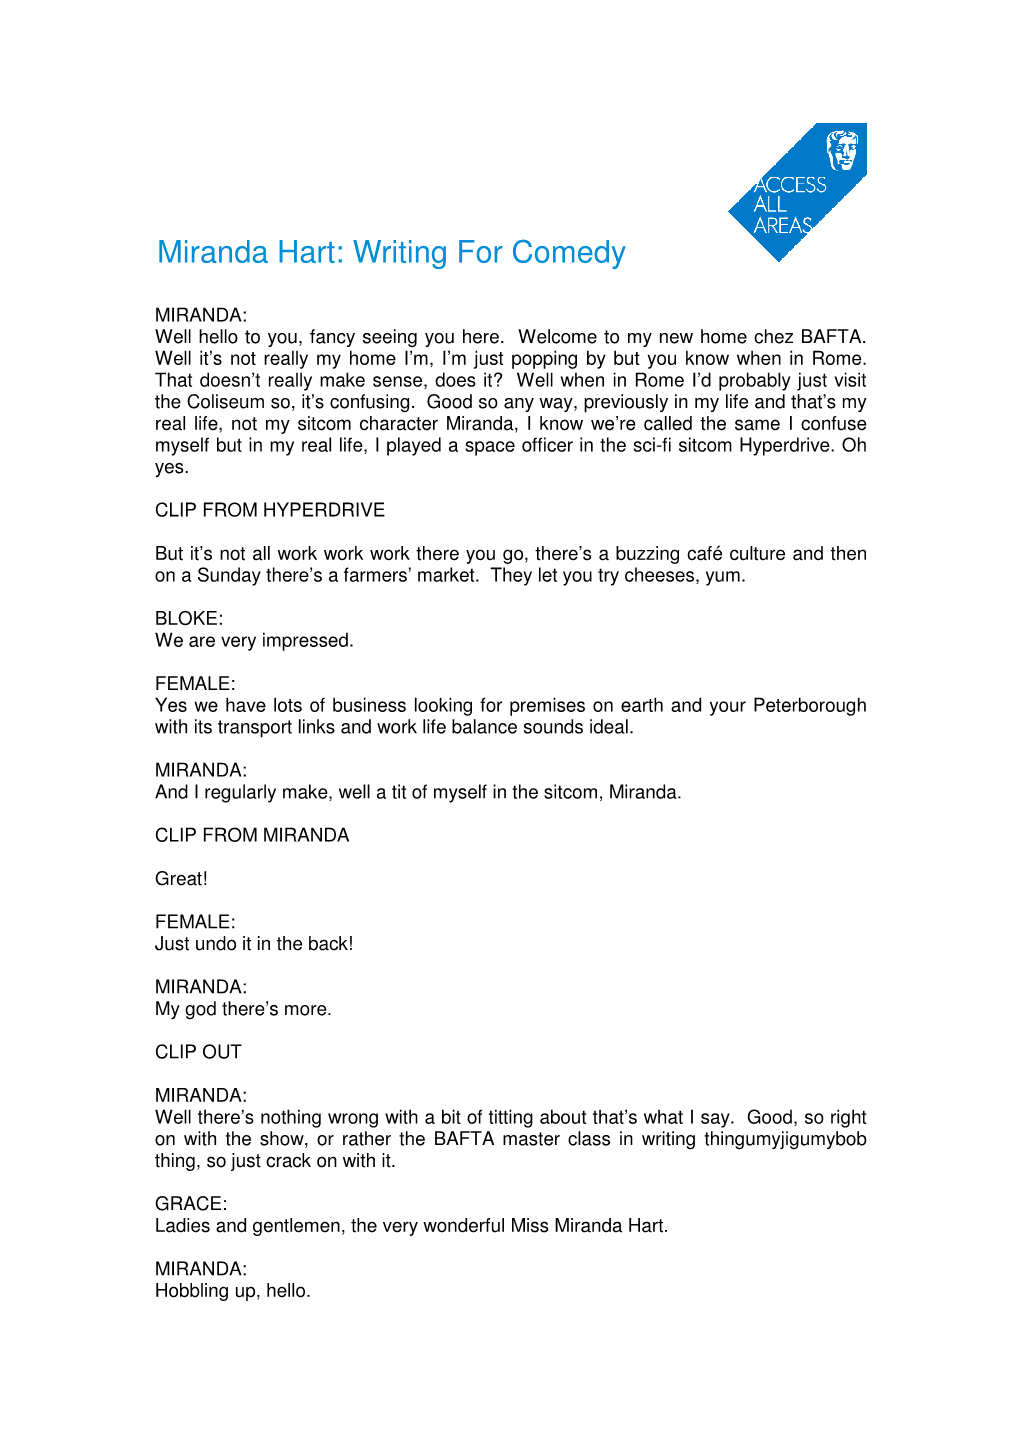 Miranda Hart: Writing for Comedy